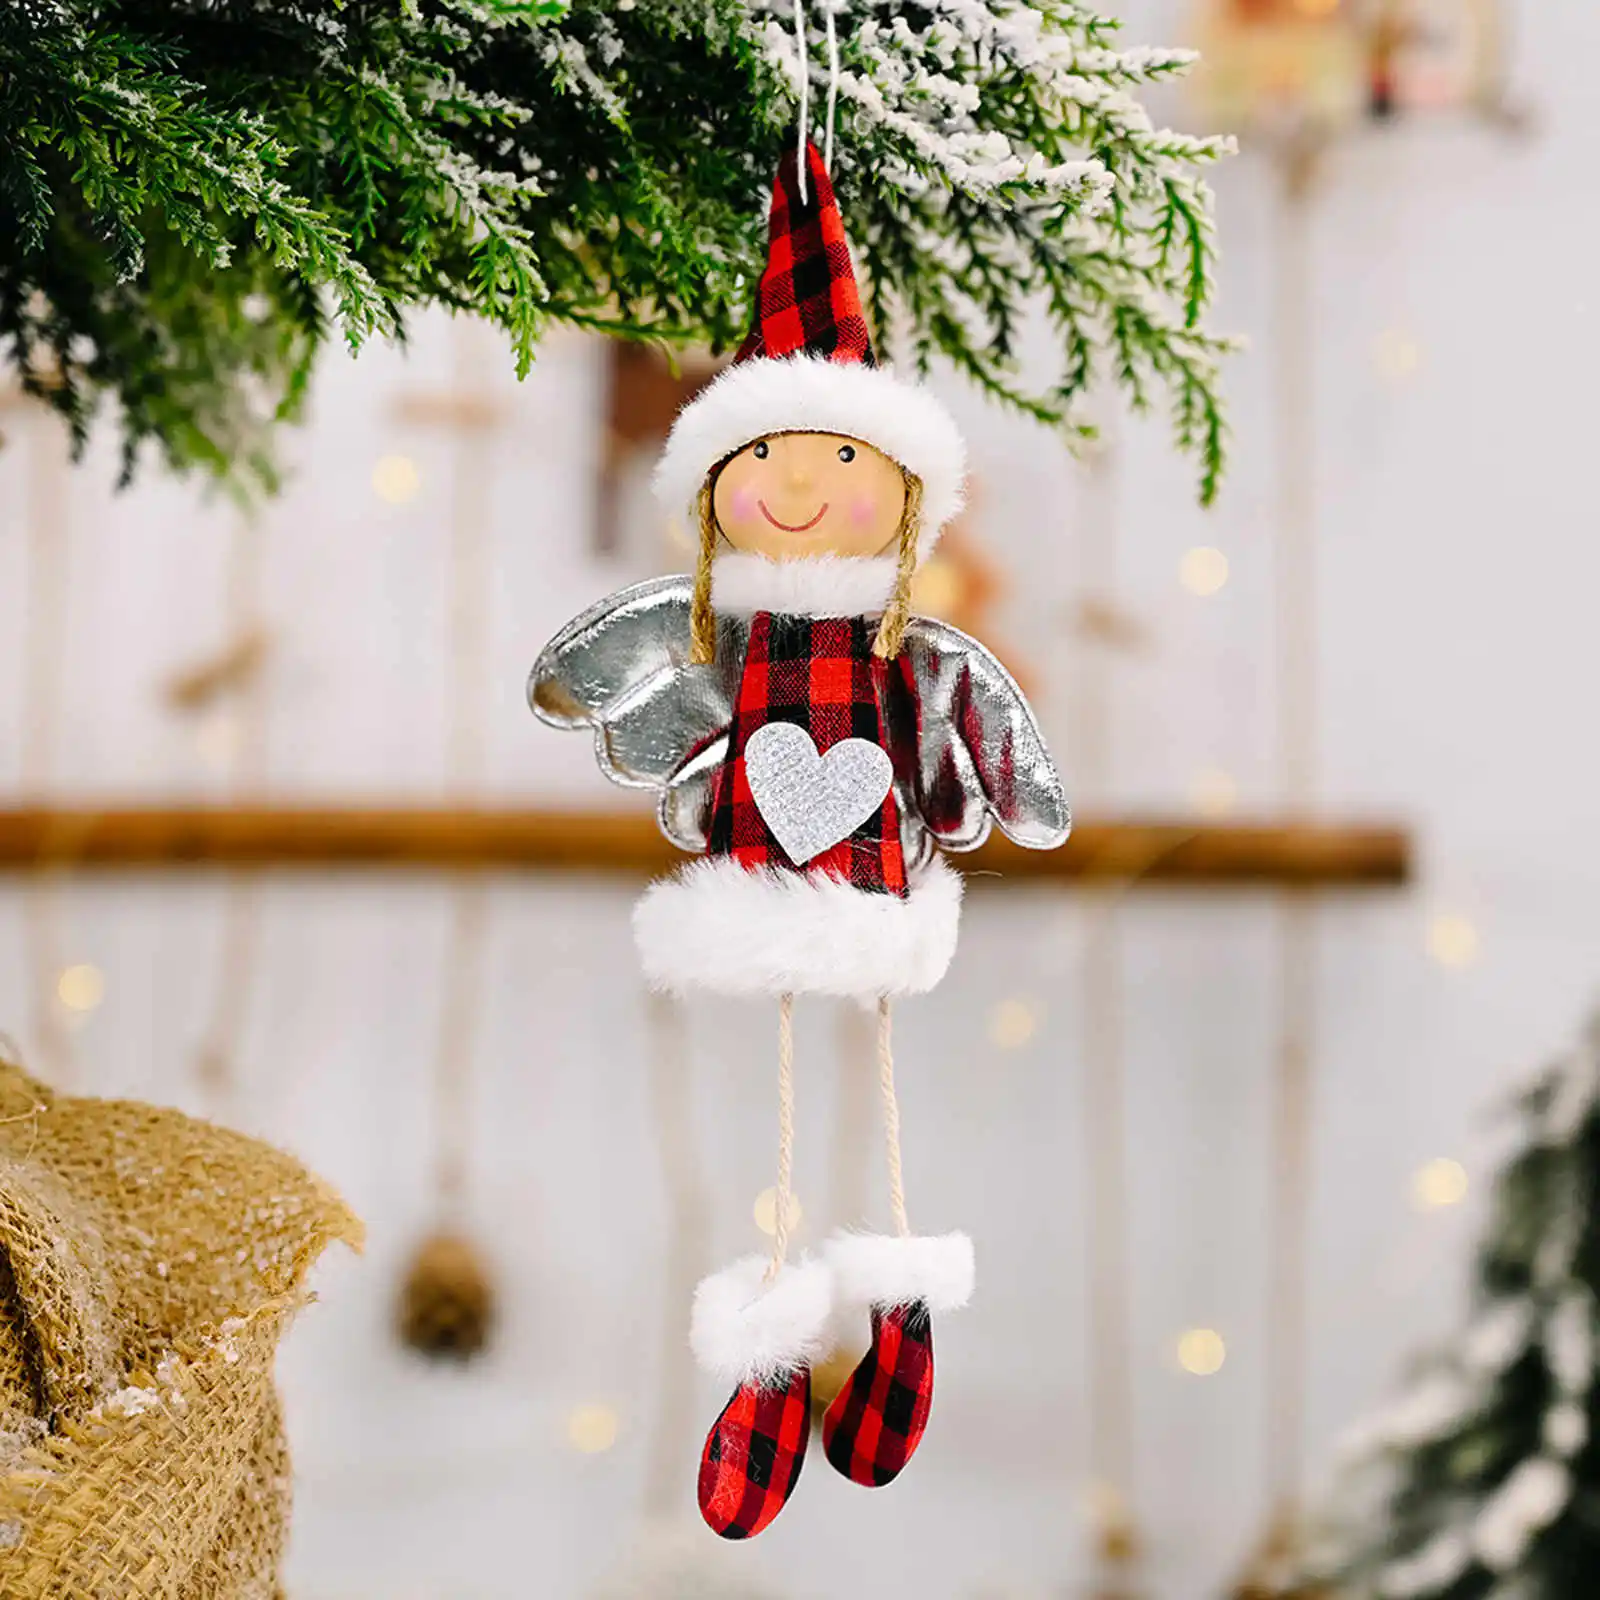 Christmas Tree Ornaments Xmas Hanging Plush Decorations Holiday Party Pendant Decor Ornaments Set for Christmas Santa Snowman Reindeer Bear Doll